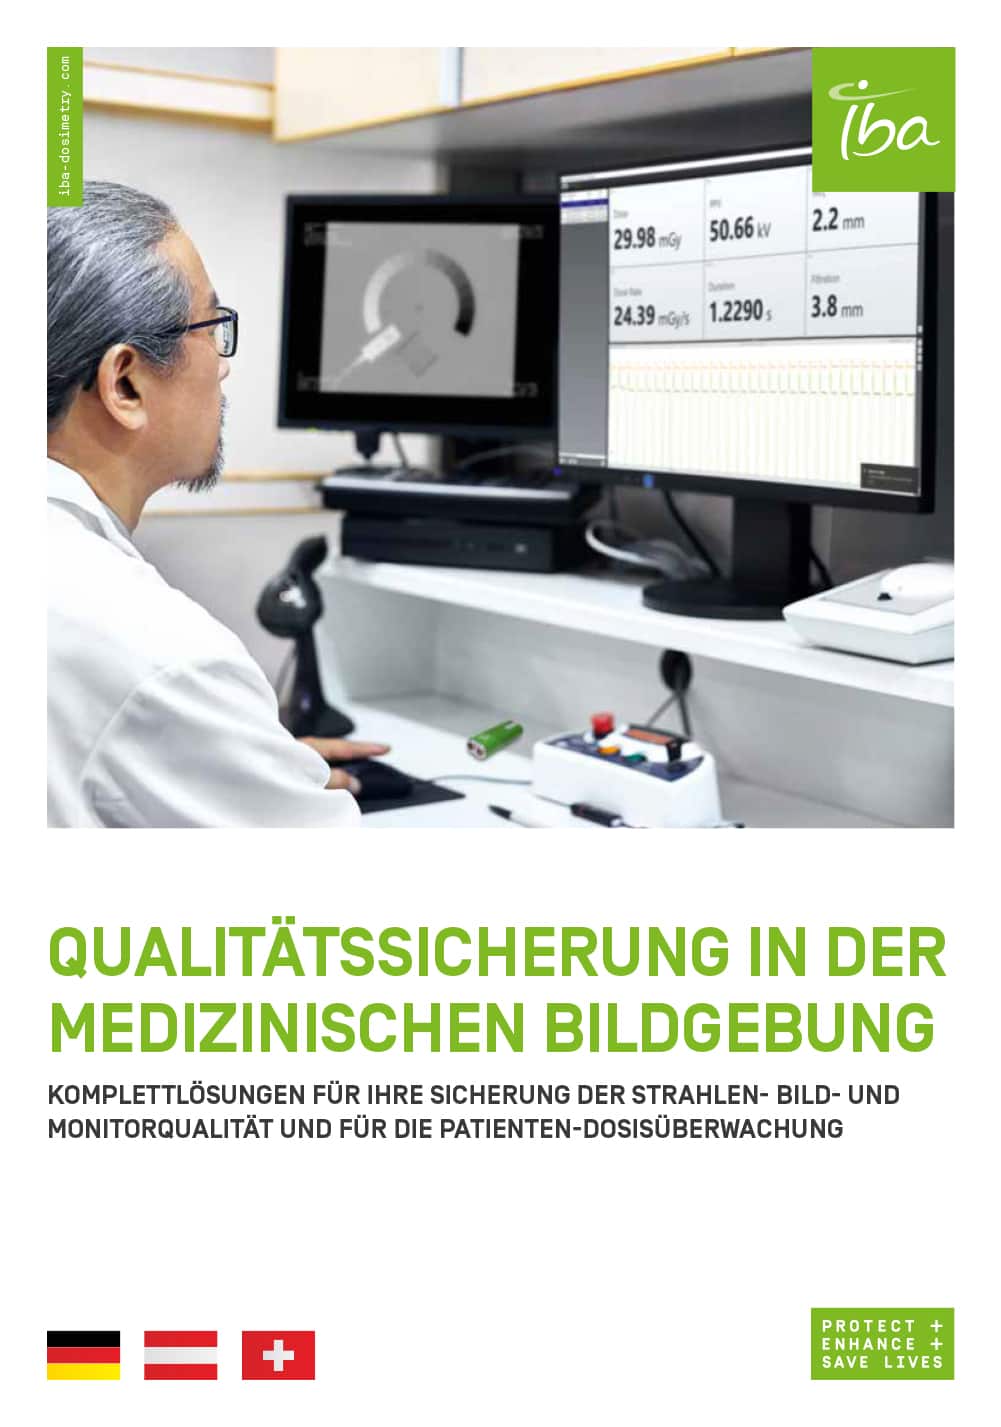 IBA Dosimetry Medical Imaging Products German